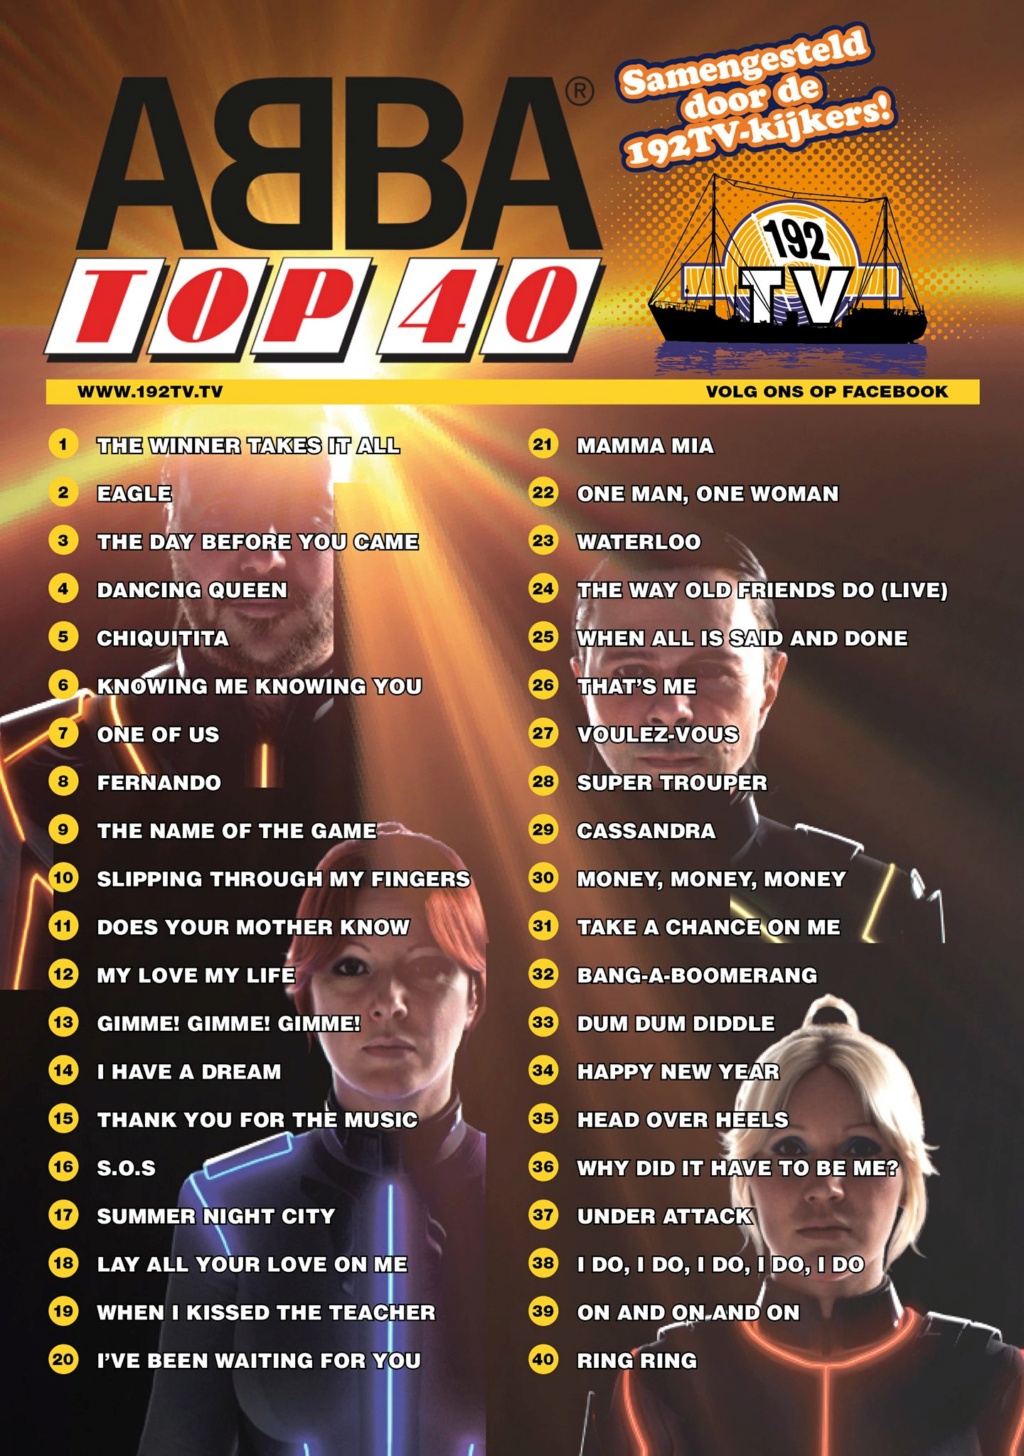 ABBA - TOP 40 (z 192TV HD) 24175910